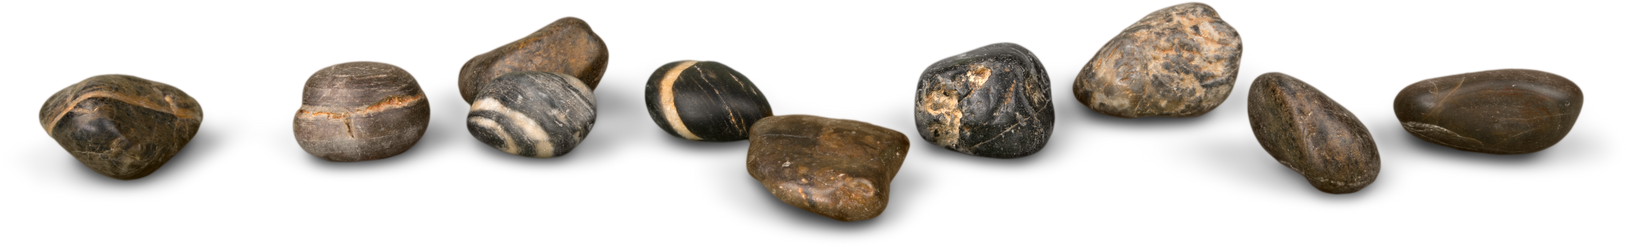 Stones or Pebbles Cutout